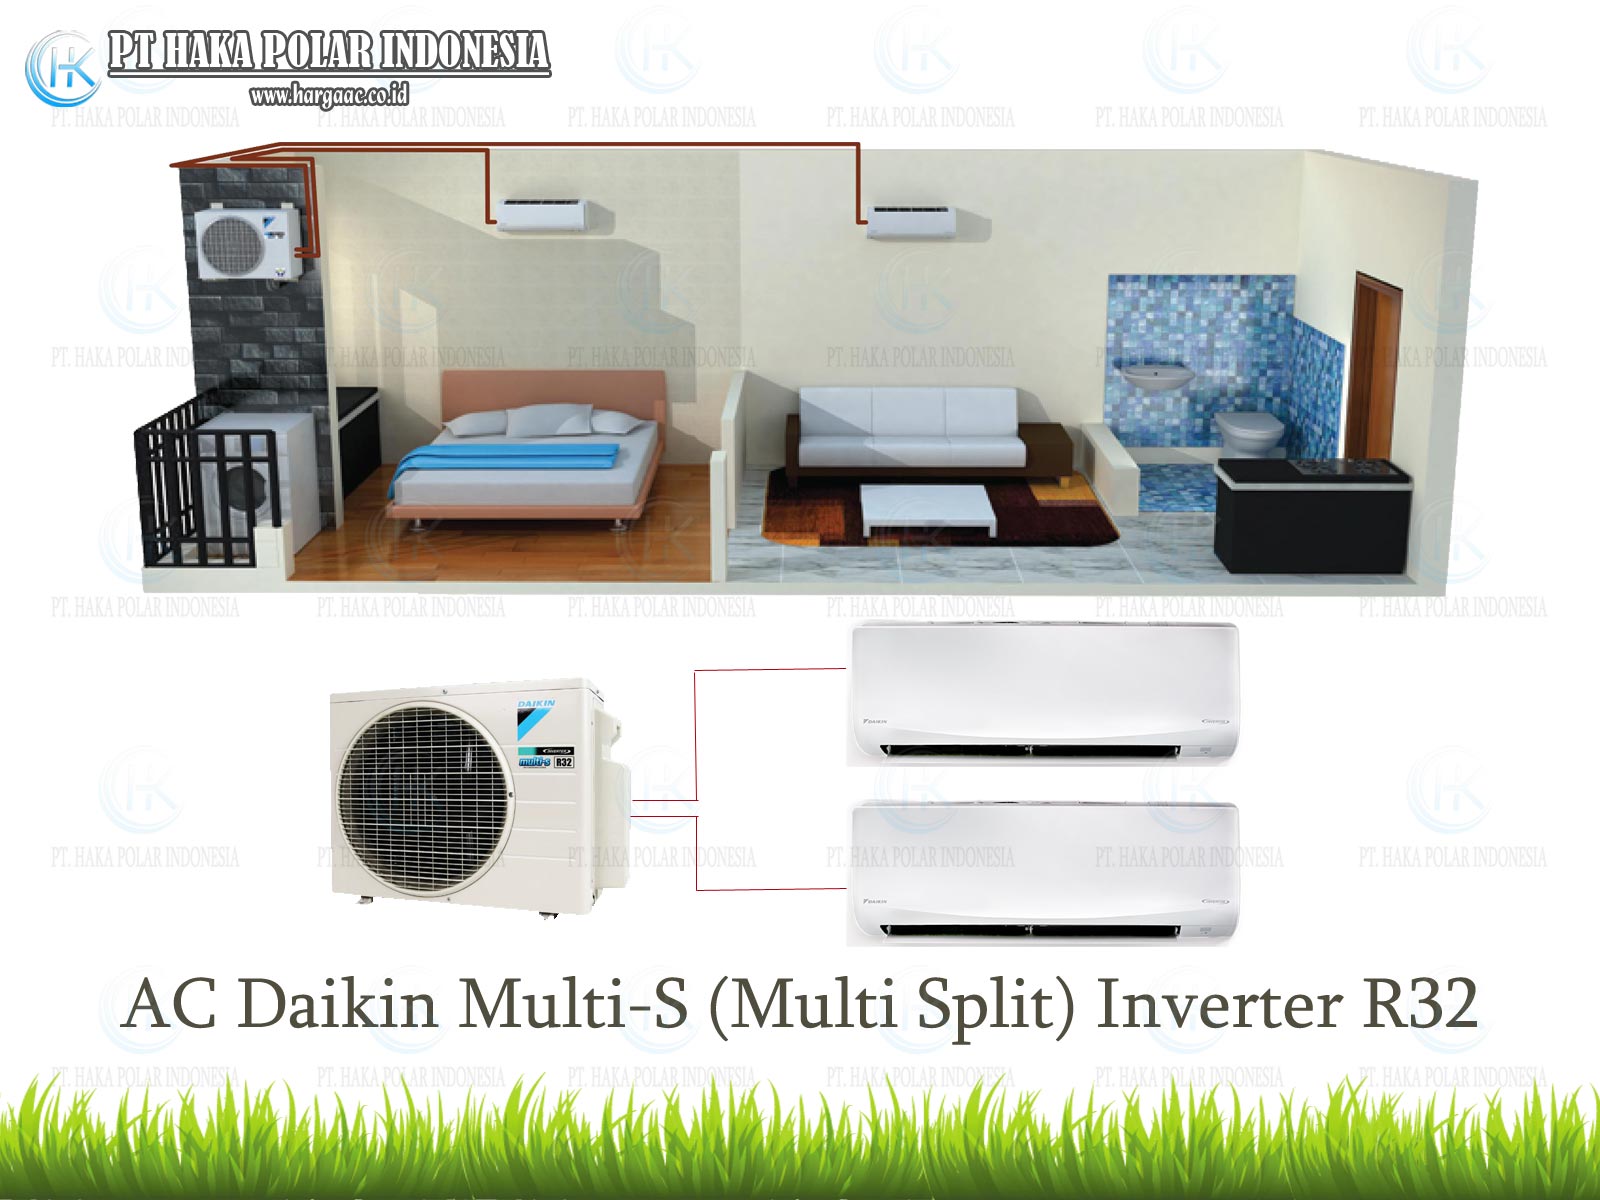 Harga Jual AC Daikin Multi-S Split Inverter R32